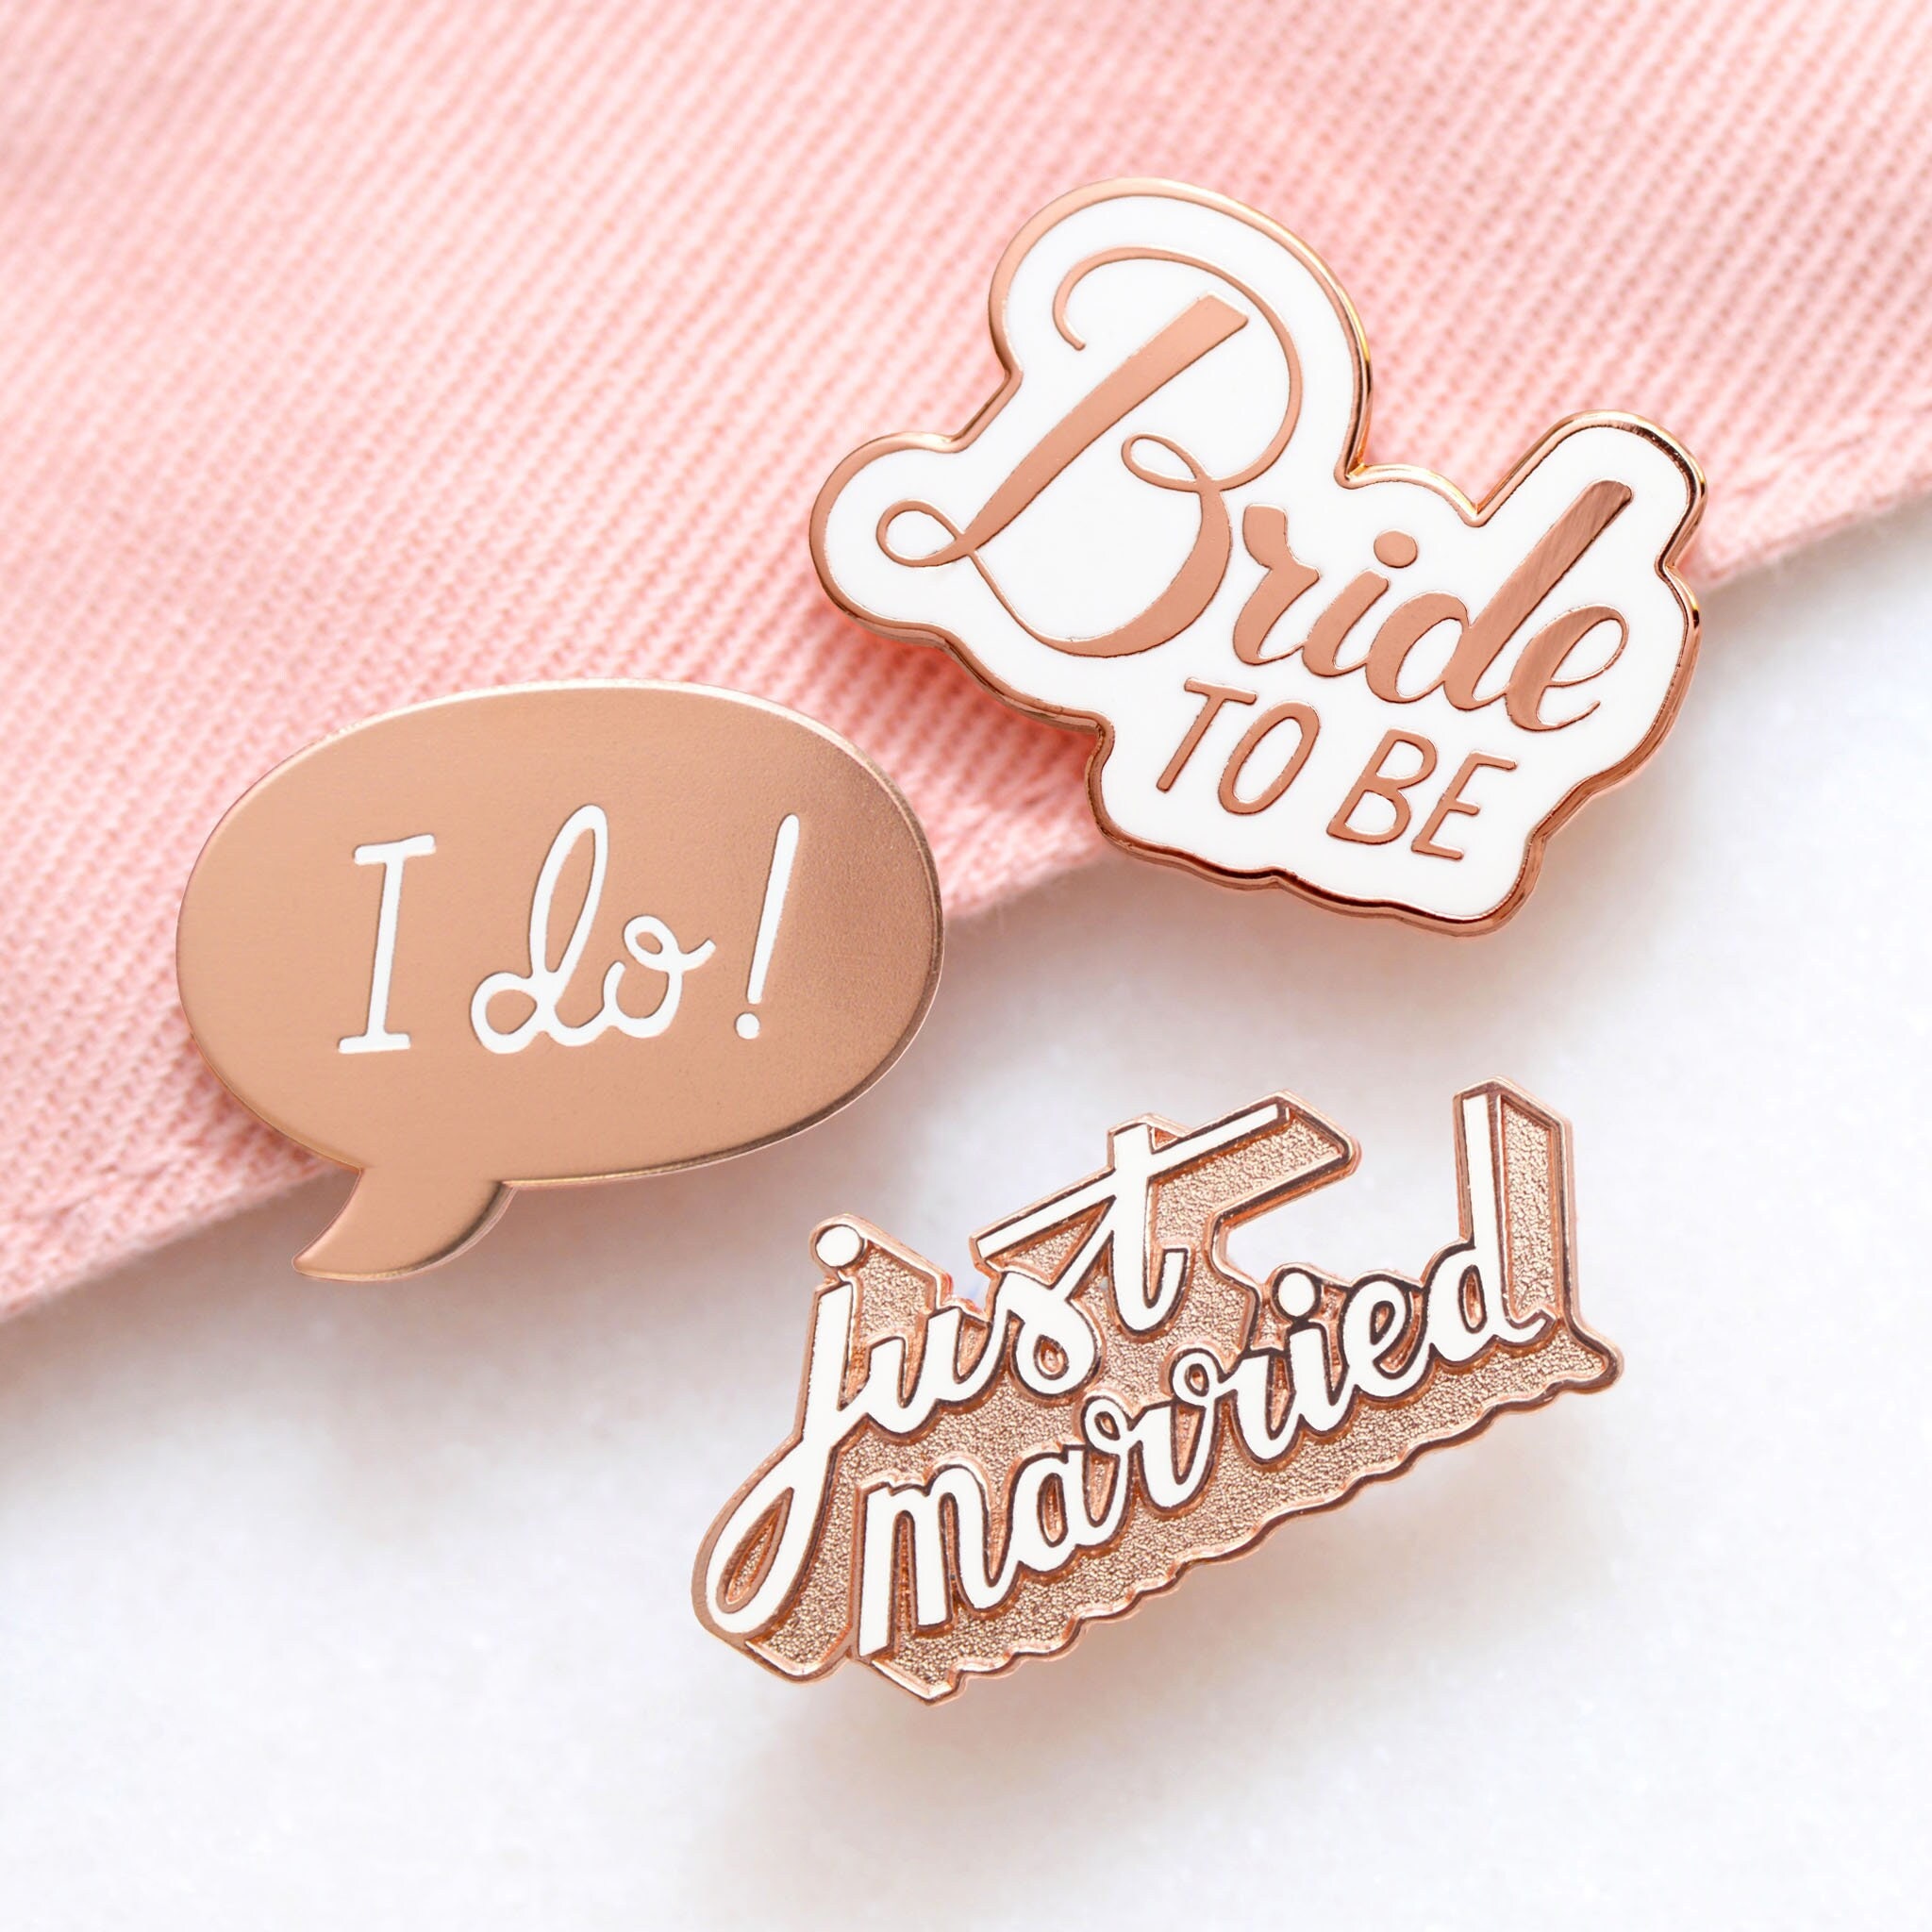 Any Enamel Pin Bulk Discount Pins Hard Enamel Pin Badge Typographic Pins  Wedding Pin Zodiac Birthstone Badges Pin Badge 